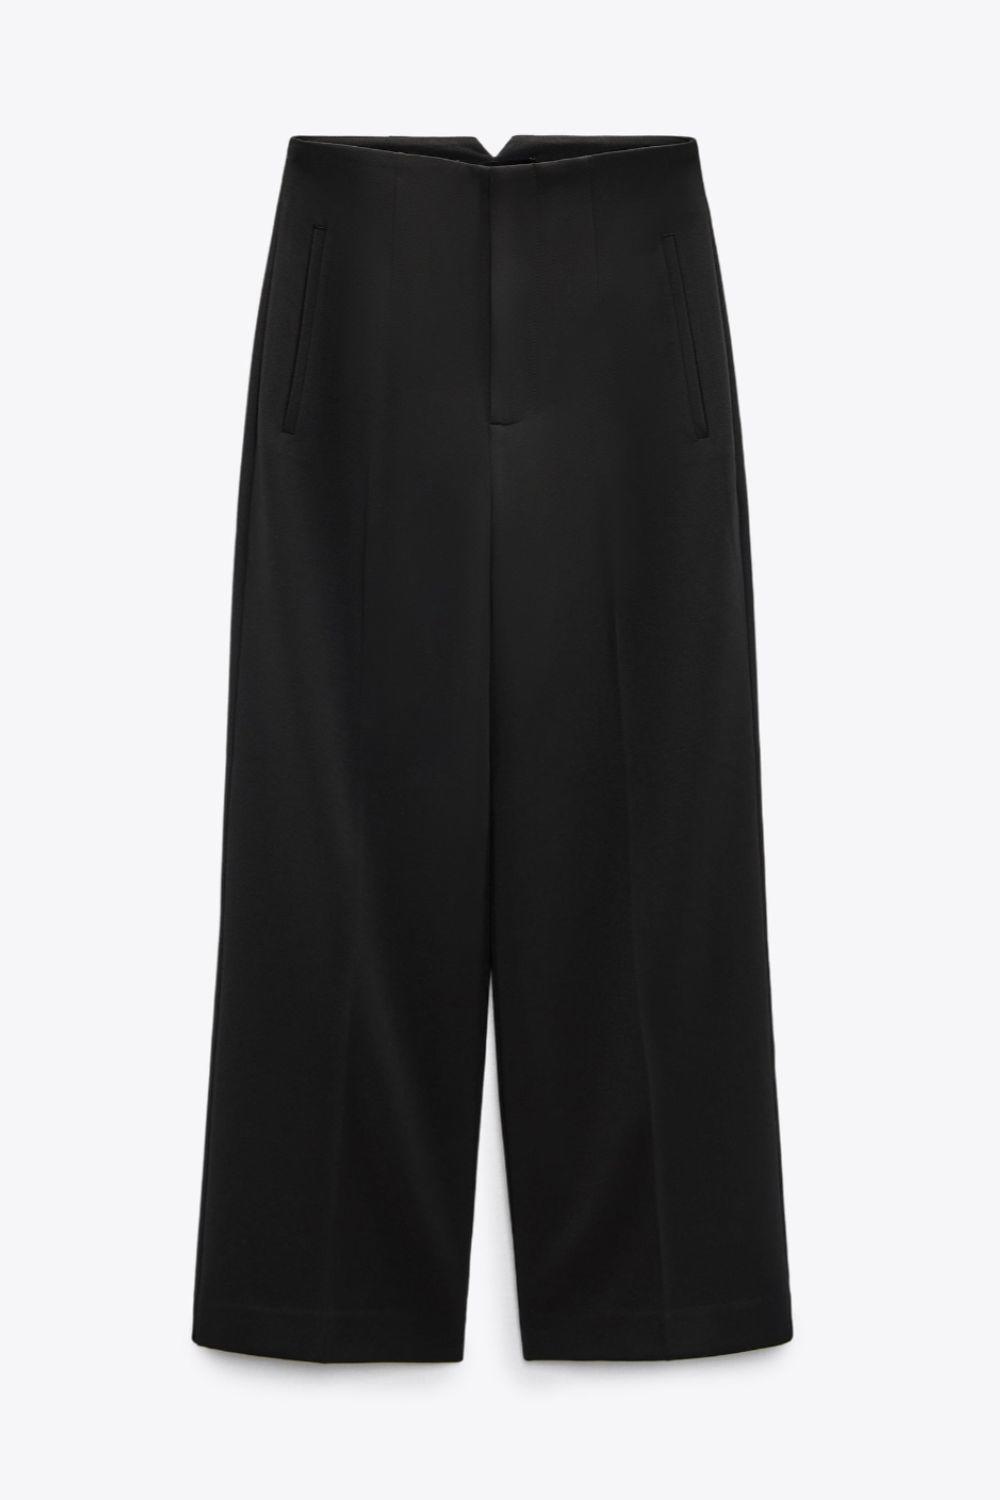 pantalones culotte negros 5